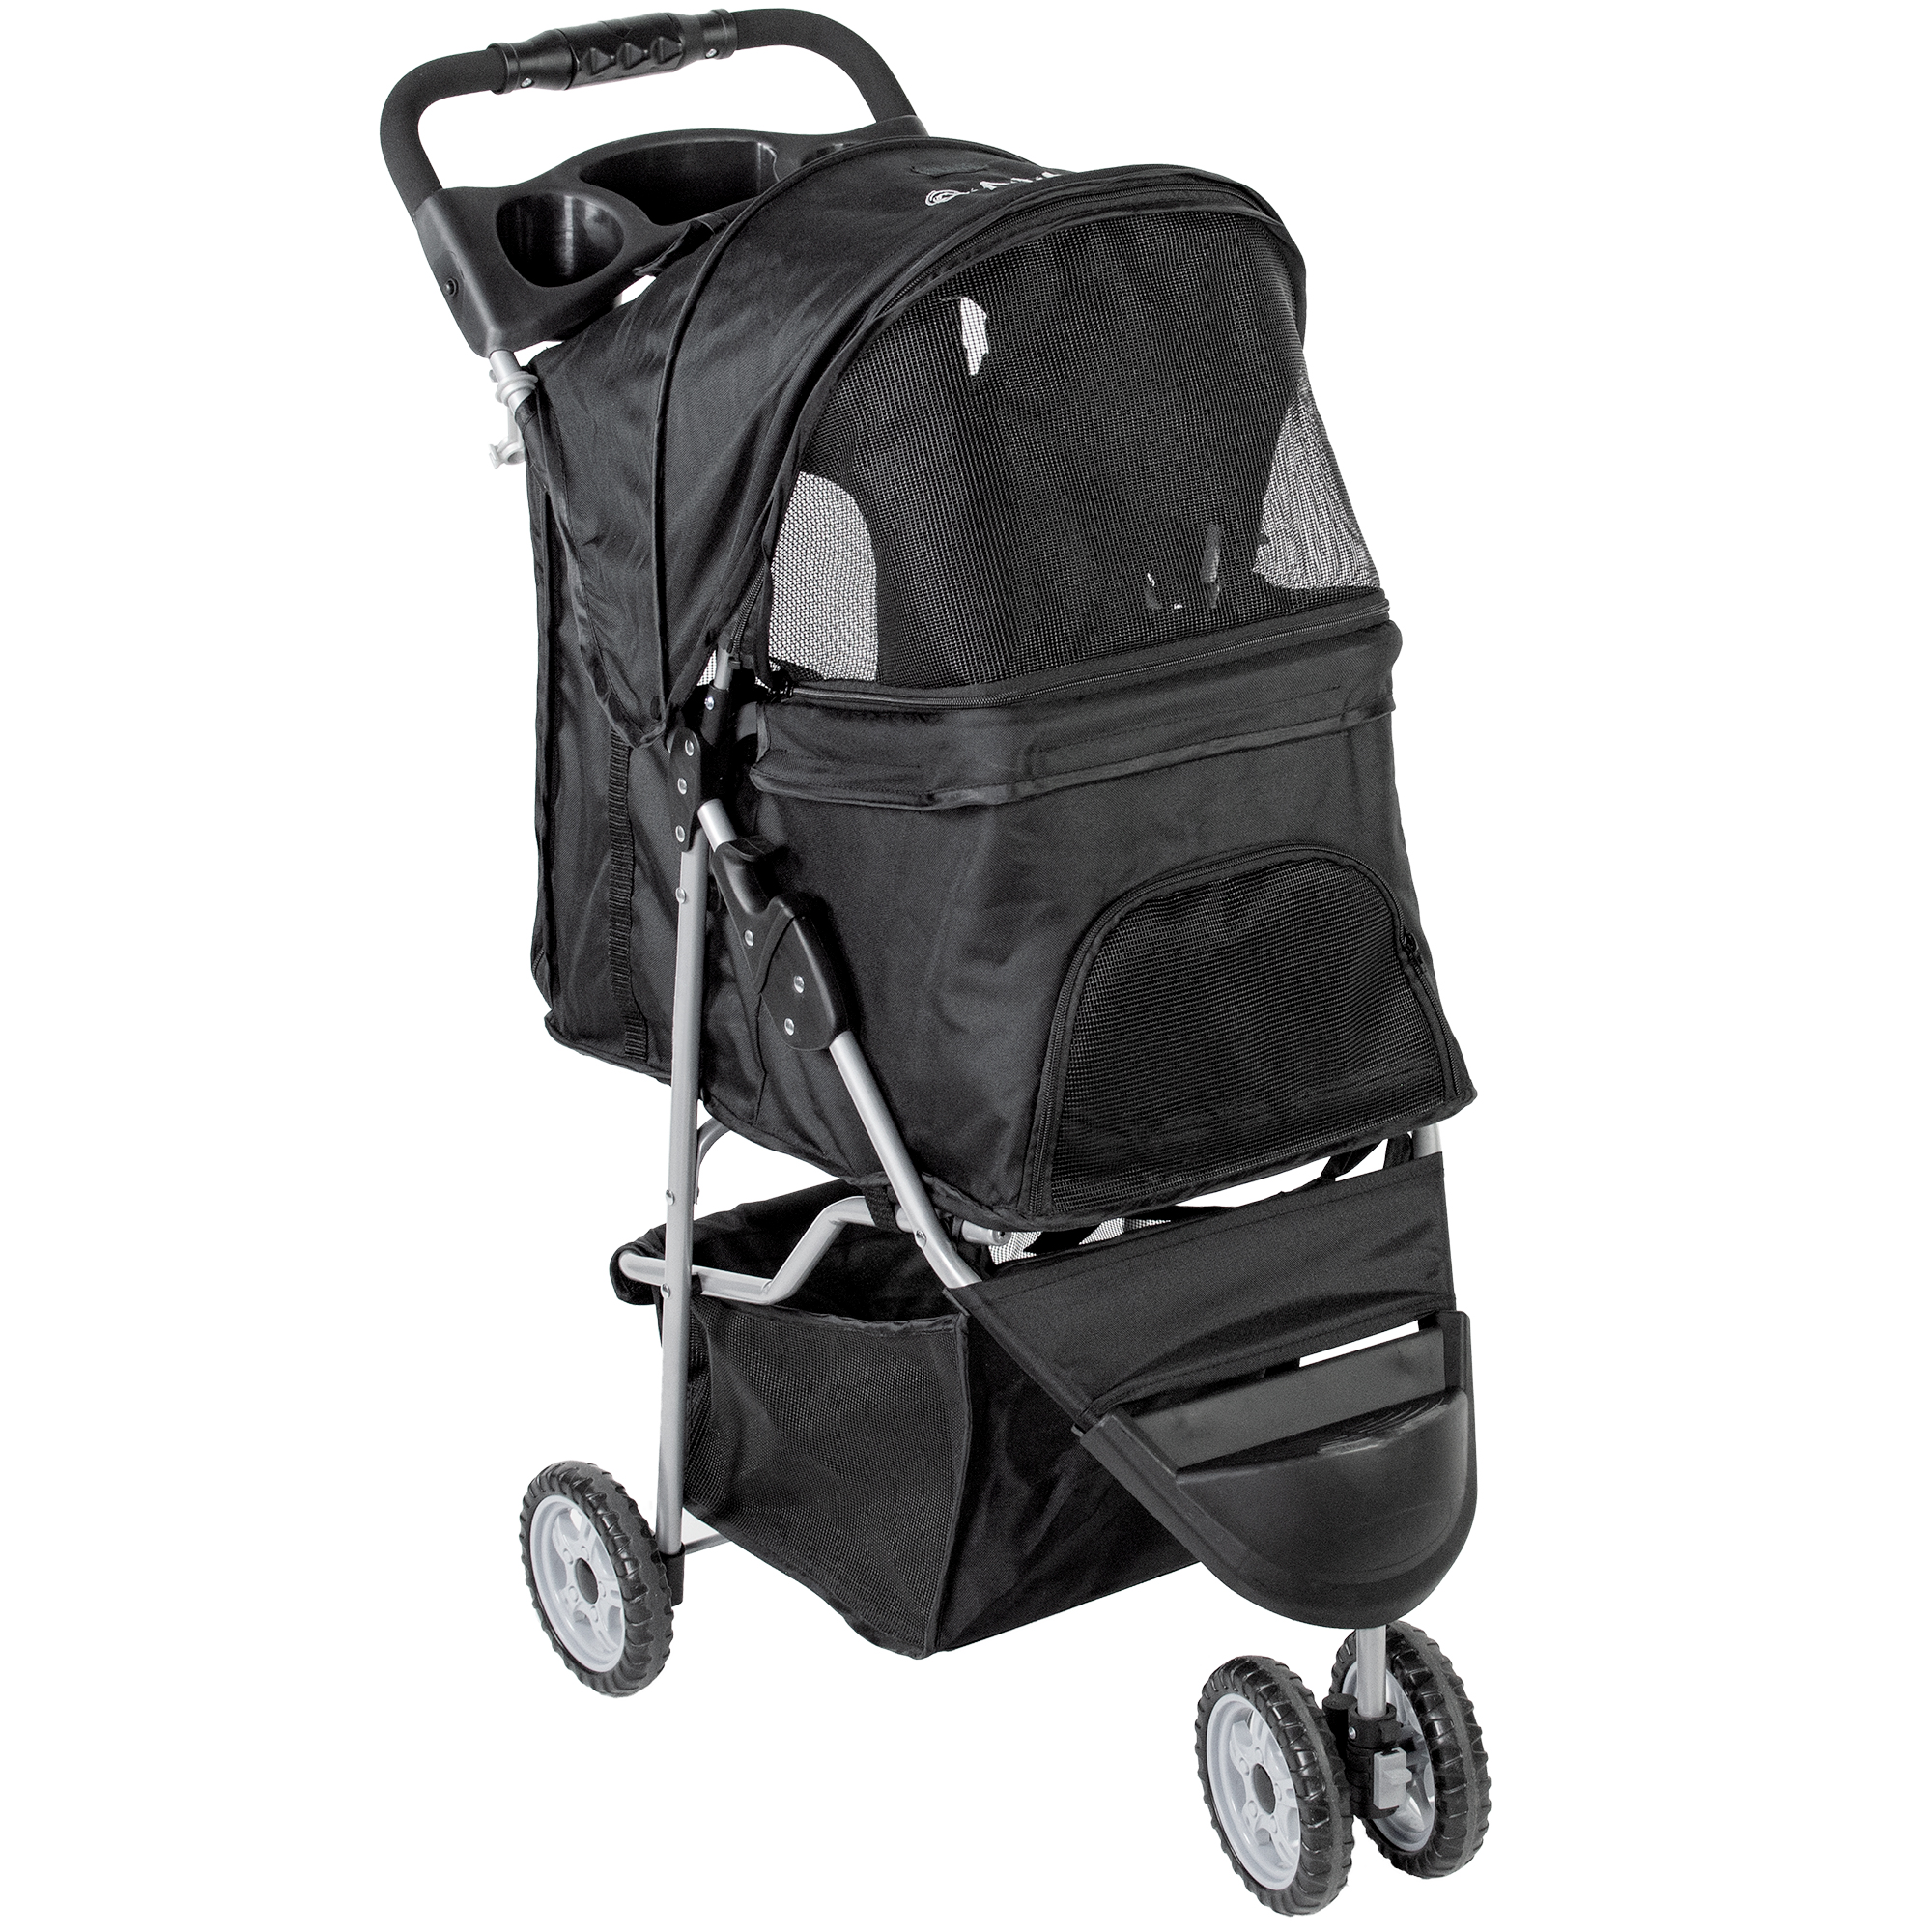 VIVO Black 3 Wheel Pet Stroller / Cat & Dog Foldable Carrier Strolling Cart - image 1 of 6